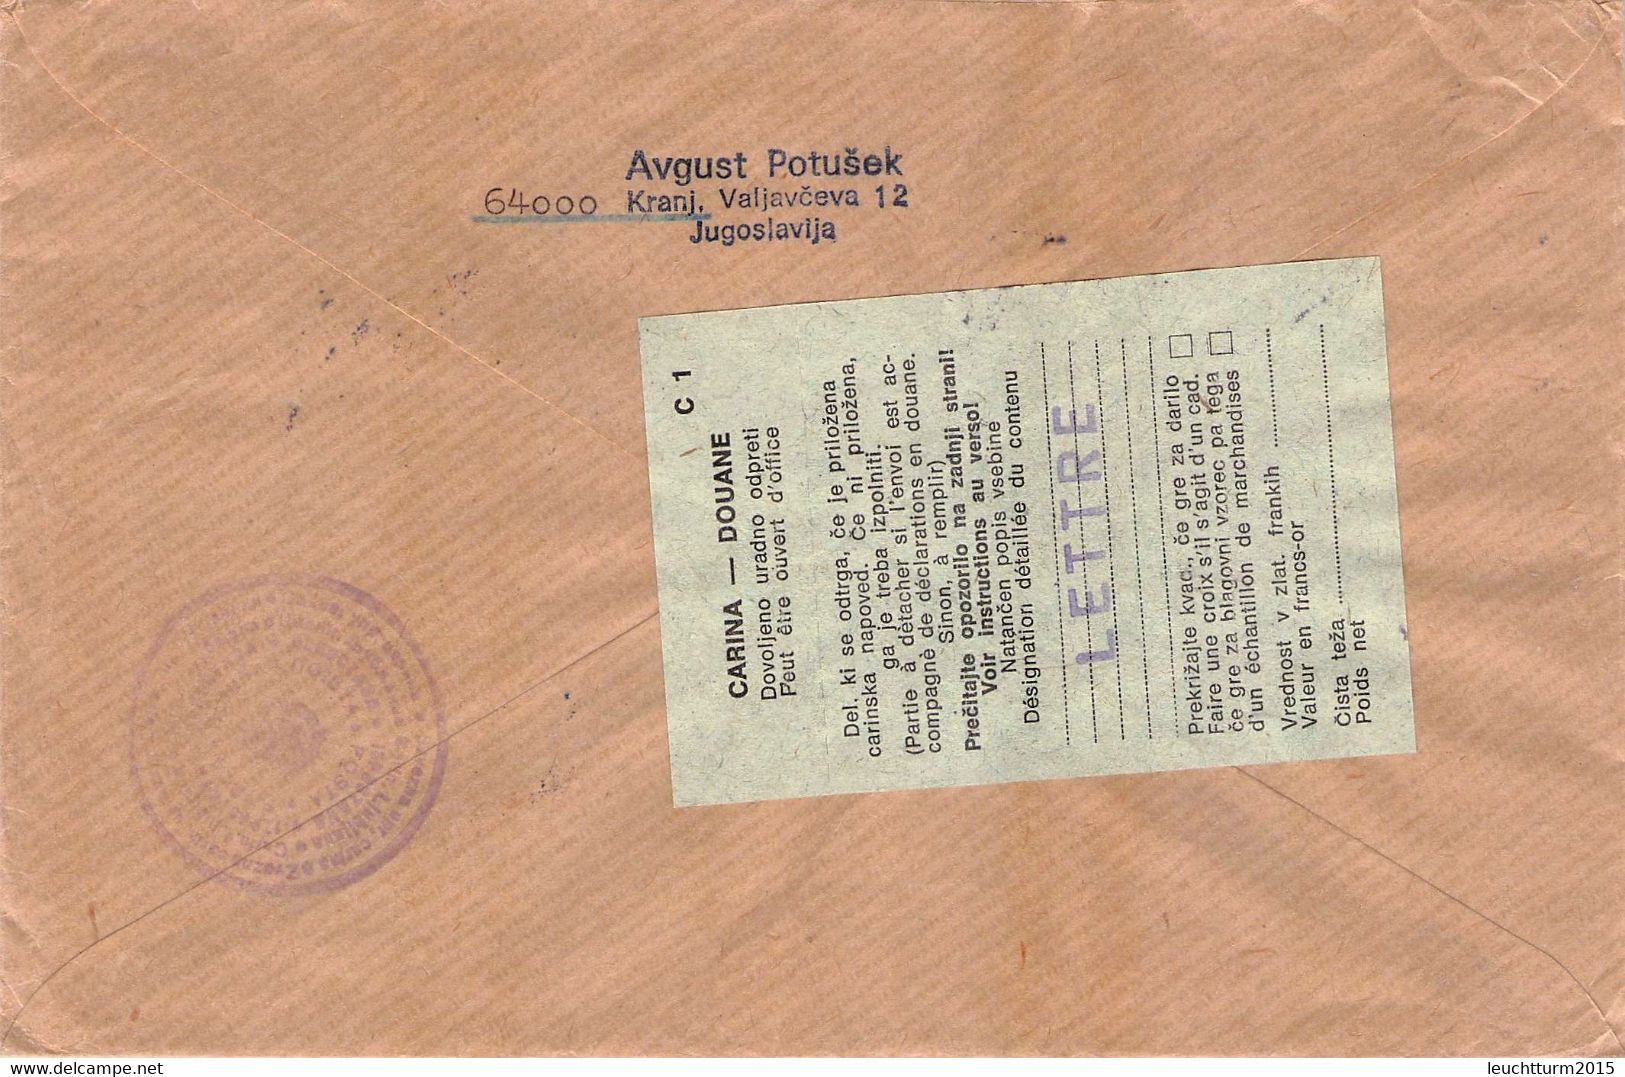 JUGOSLAVIJA - REGISTERED MAIL 1976 LJUBLJANA > ROSITZ/DDR / ZL316 - Briefe U. Dokumente